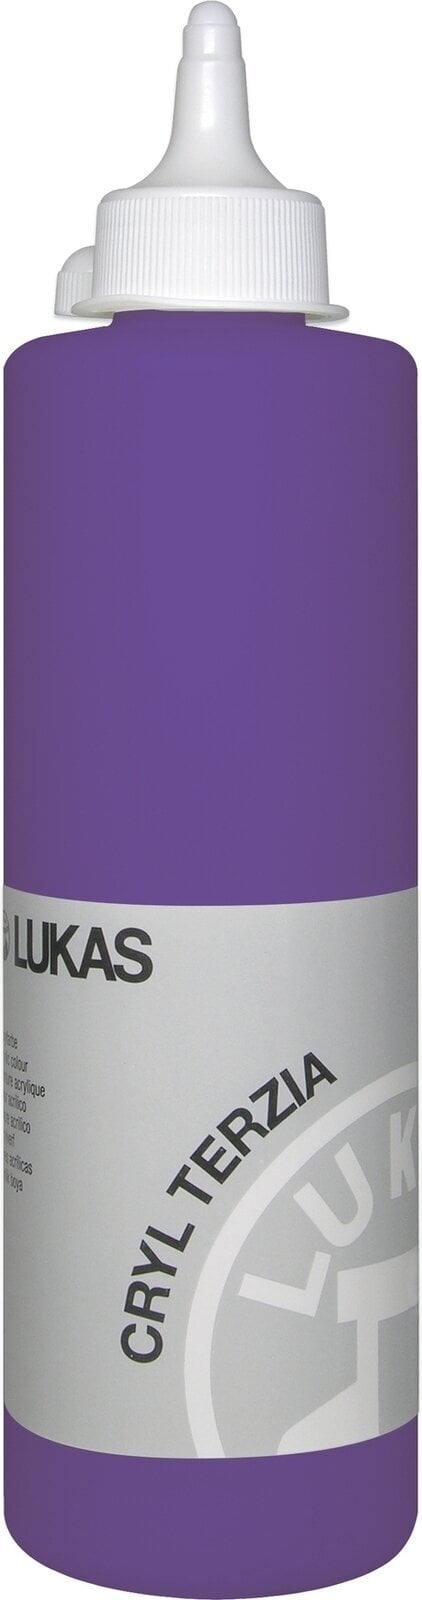 Pintura acrílica Lukas Cryl Terzia Acrylic Paint Plastic Bottle Acrylic Paint Cobalt Violet Deep Hue 500 ml 1 pc